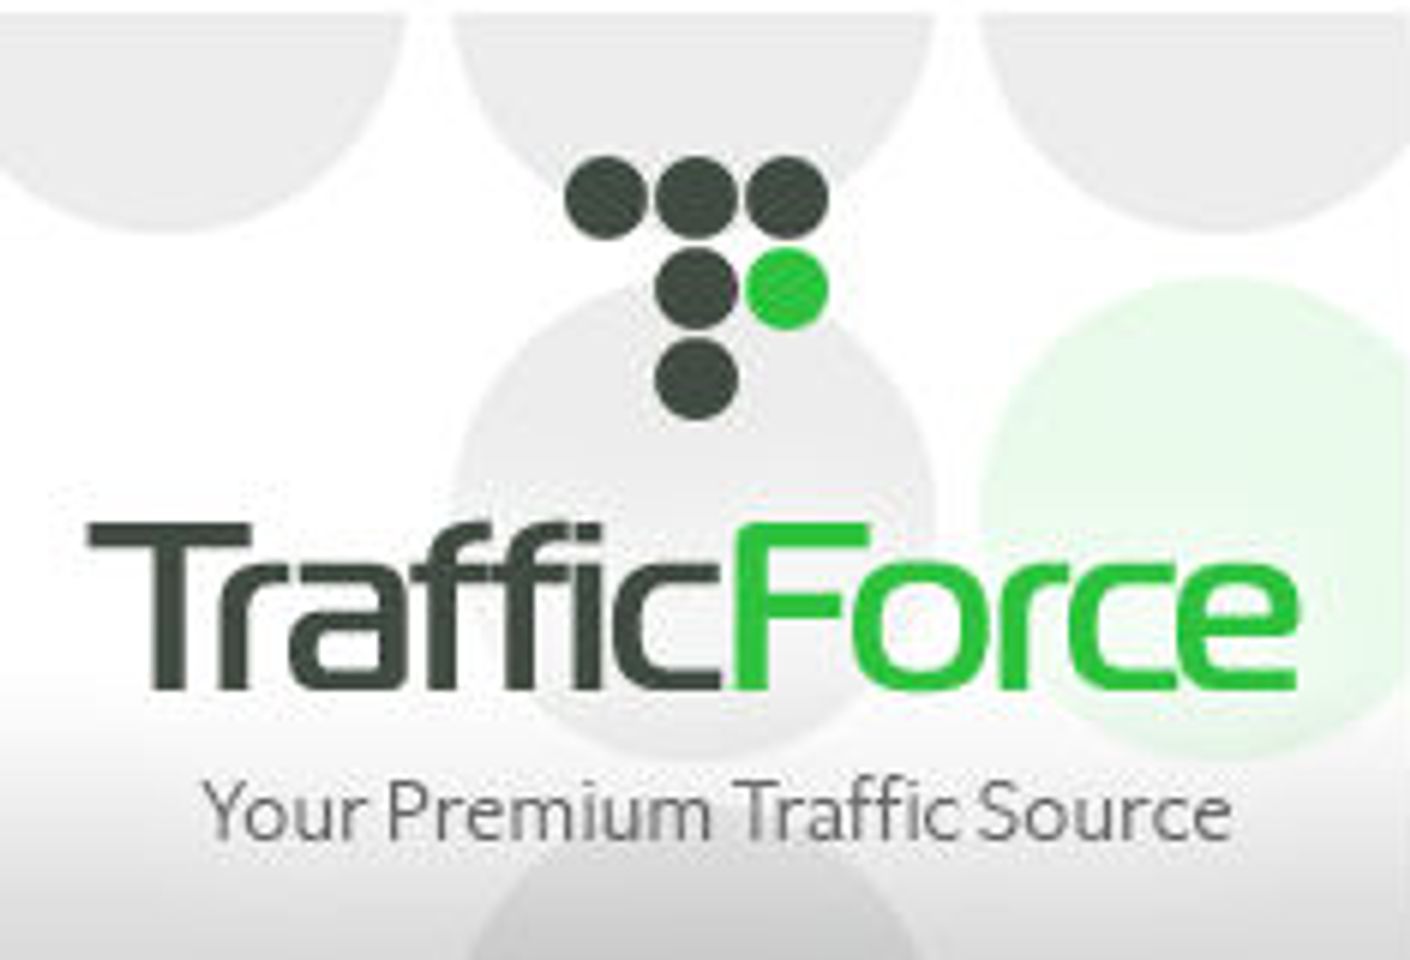 TrafficForce Surpasses 10 Billion Impression Per Month